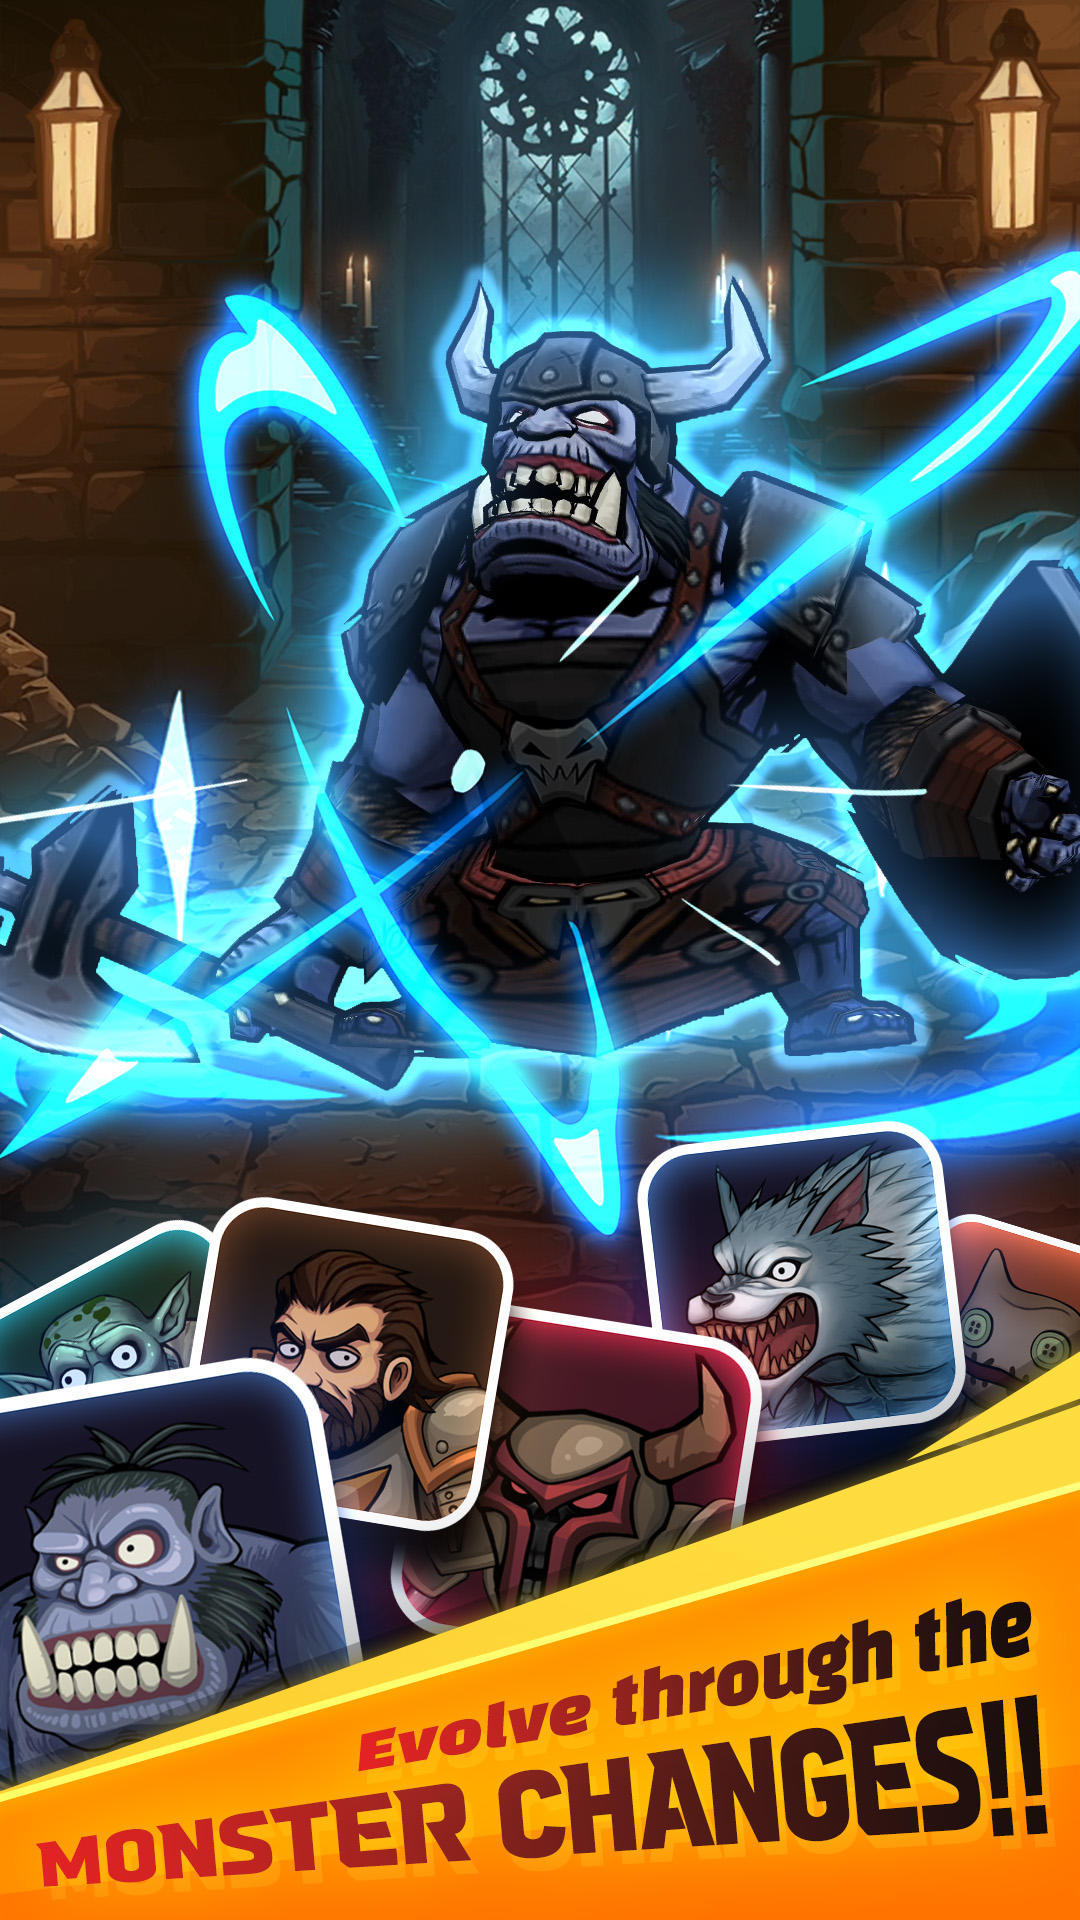 DemonsTower screenshot game